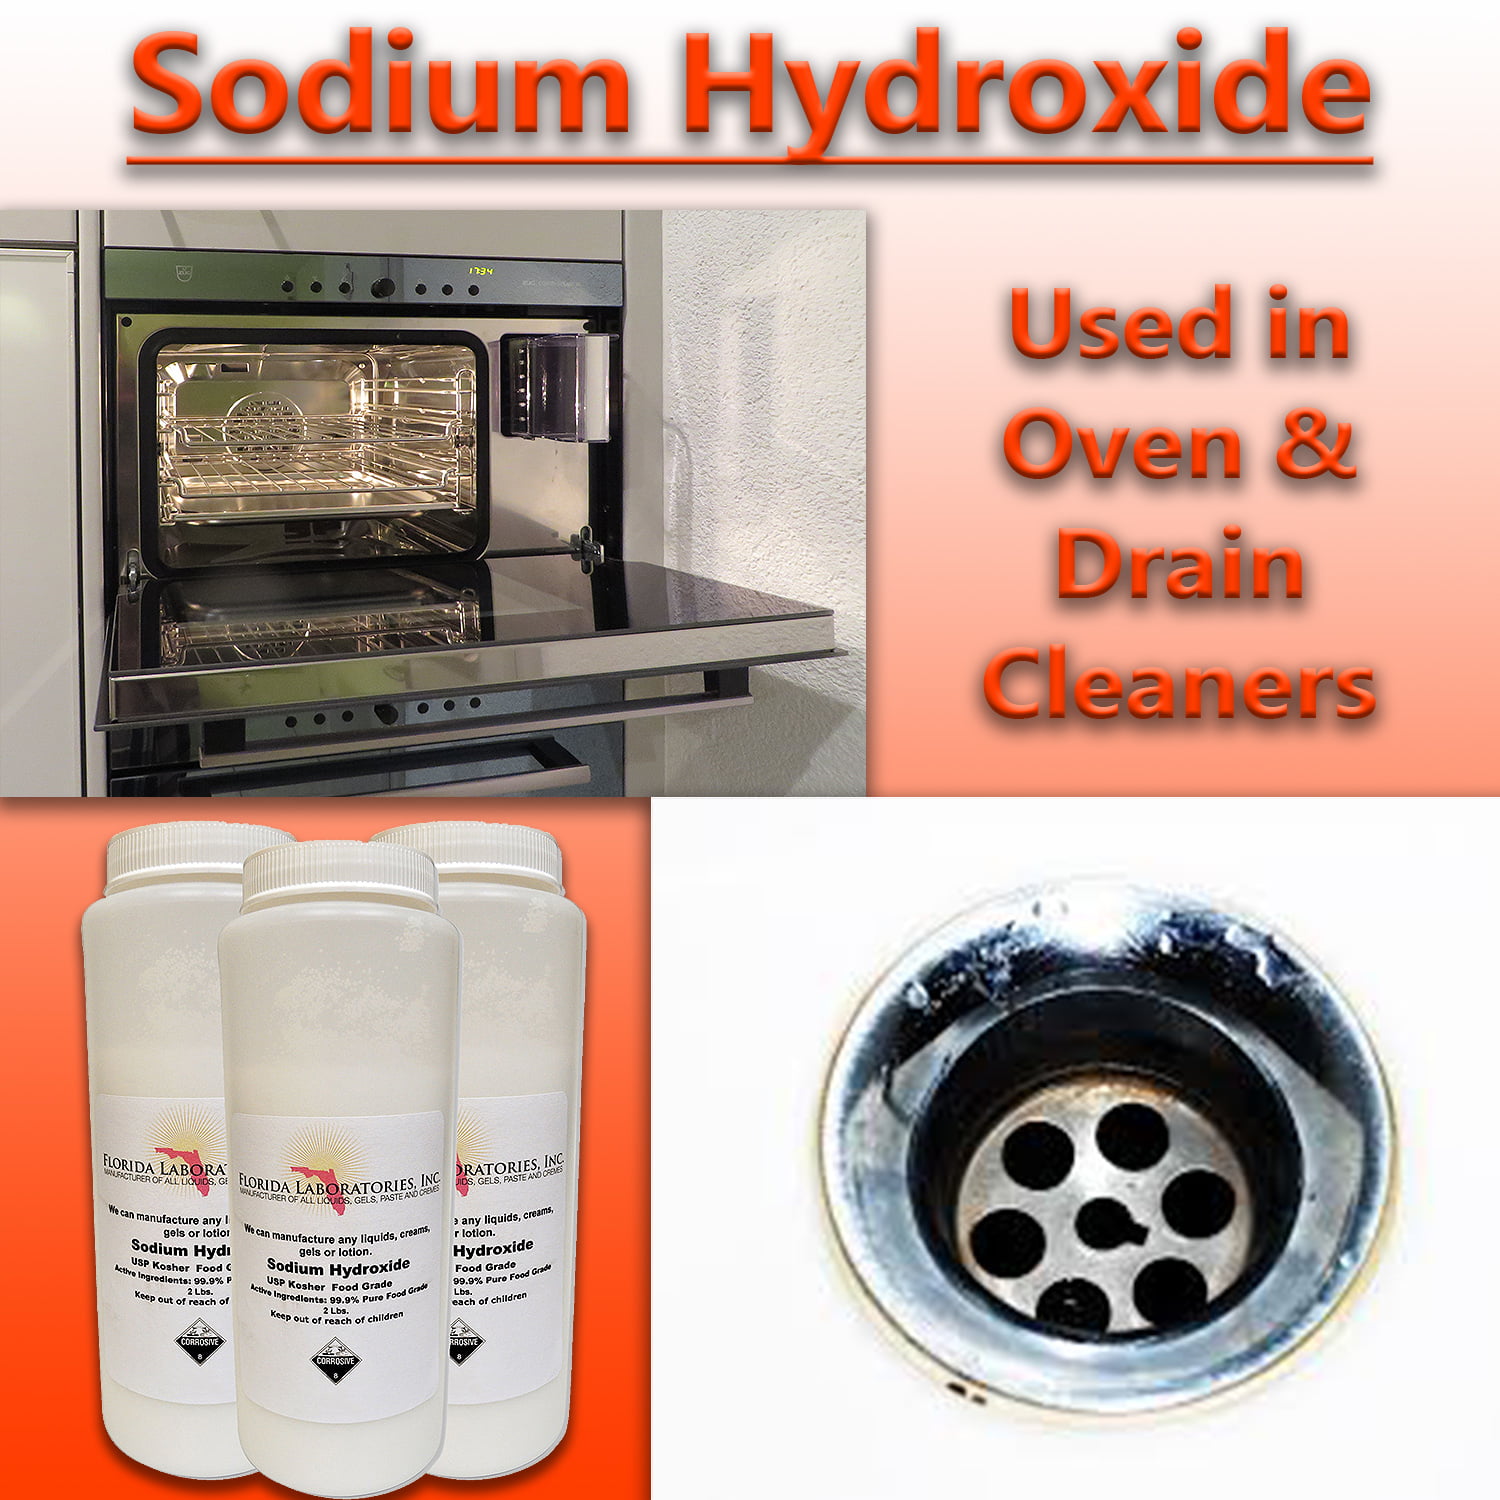 Sodium Hydroxide Beads 6 Lbs - Food Grade - Pure Lye White Caustic